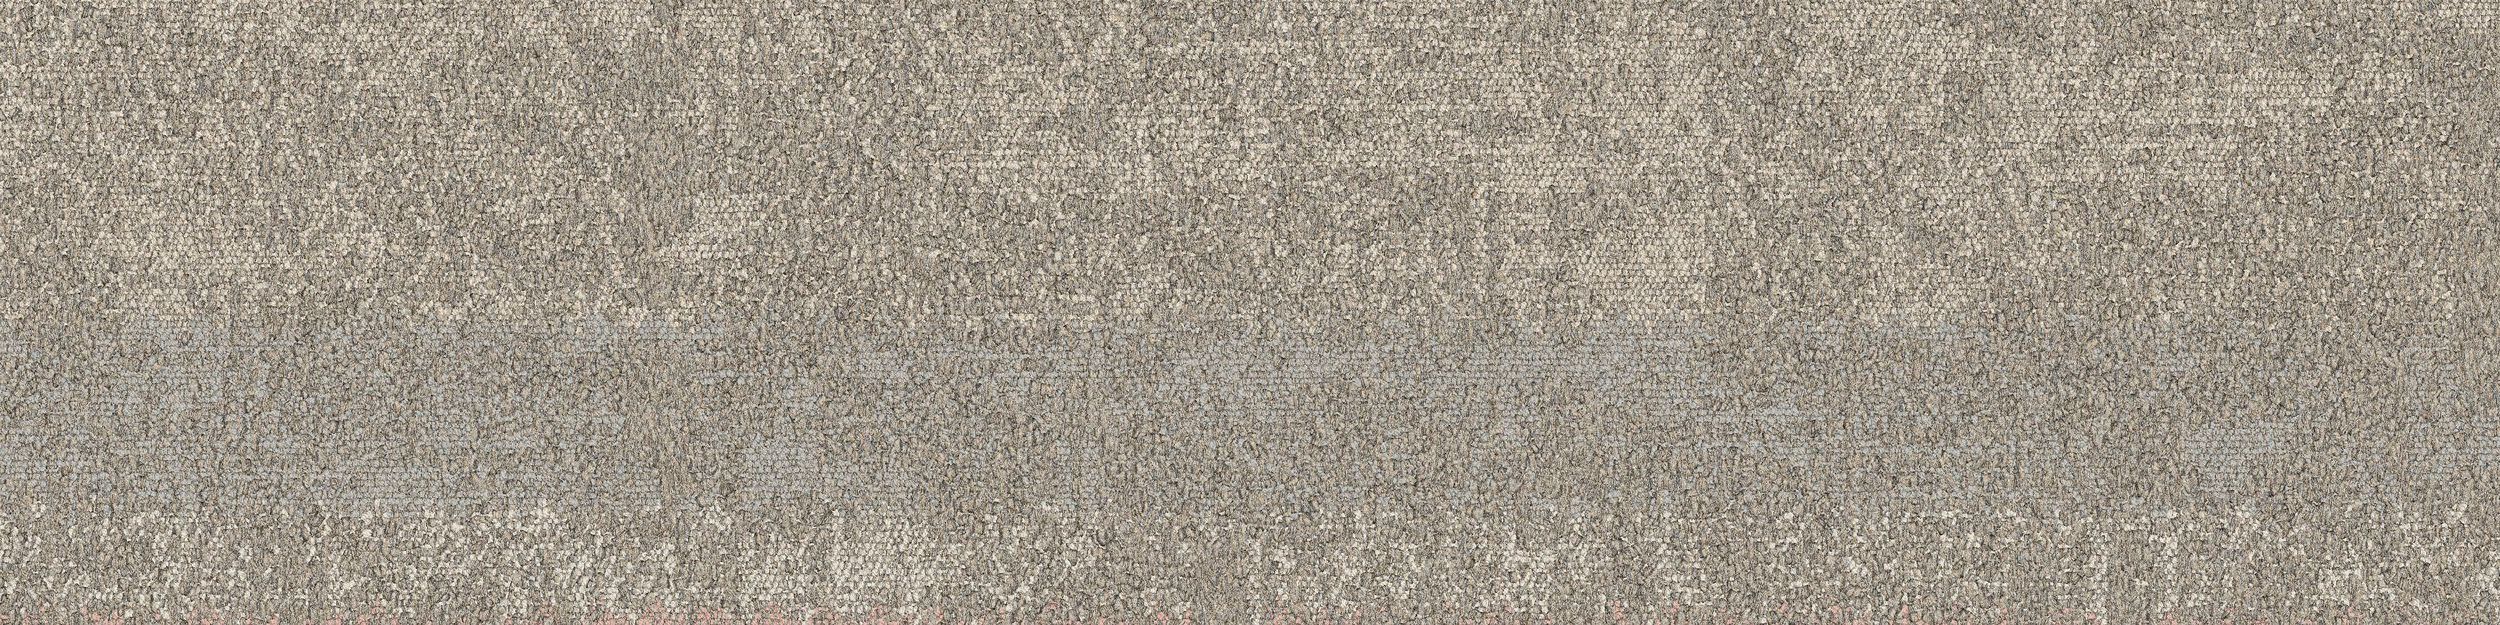 Up At Dawn Carpet Tile In Rhodium image number 2